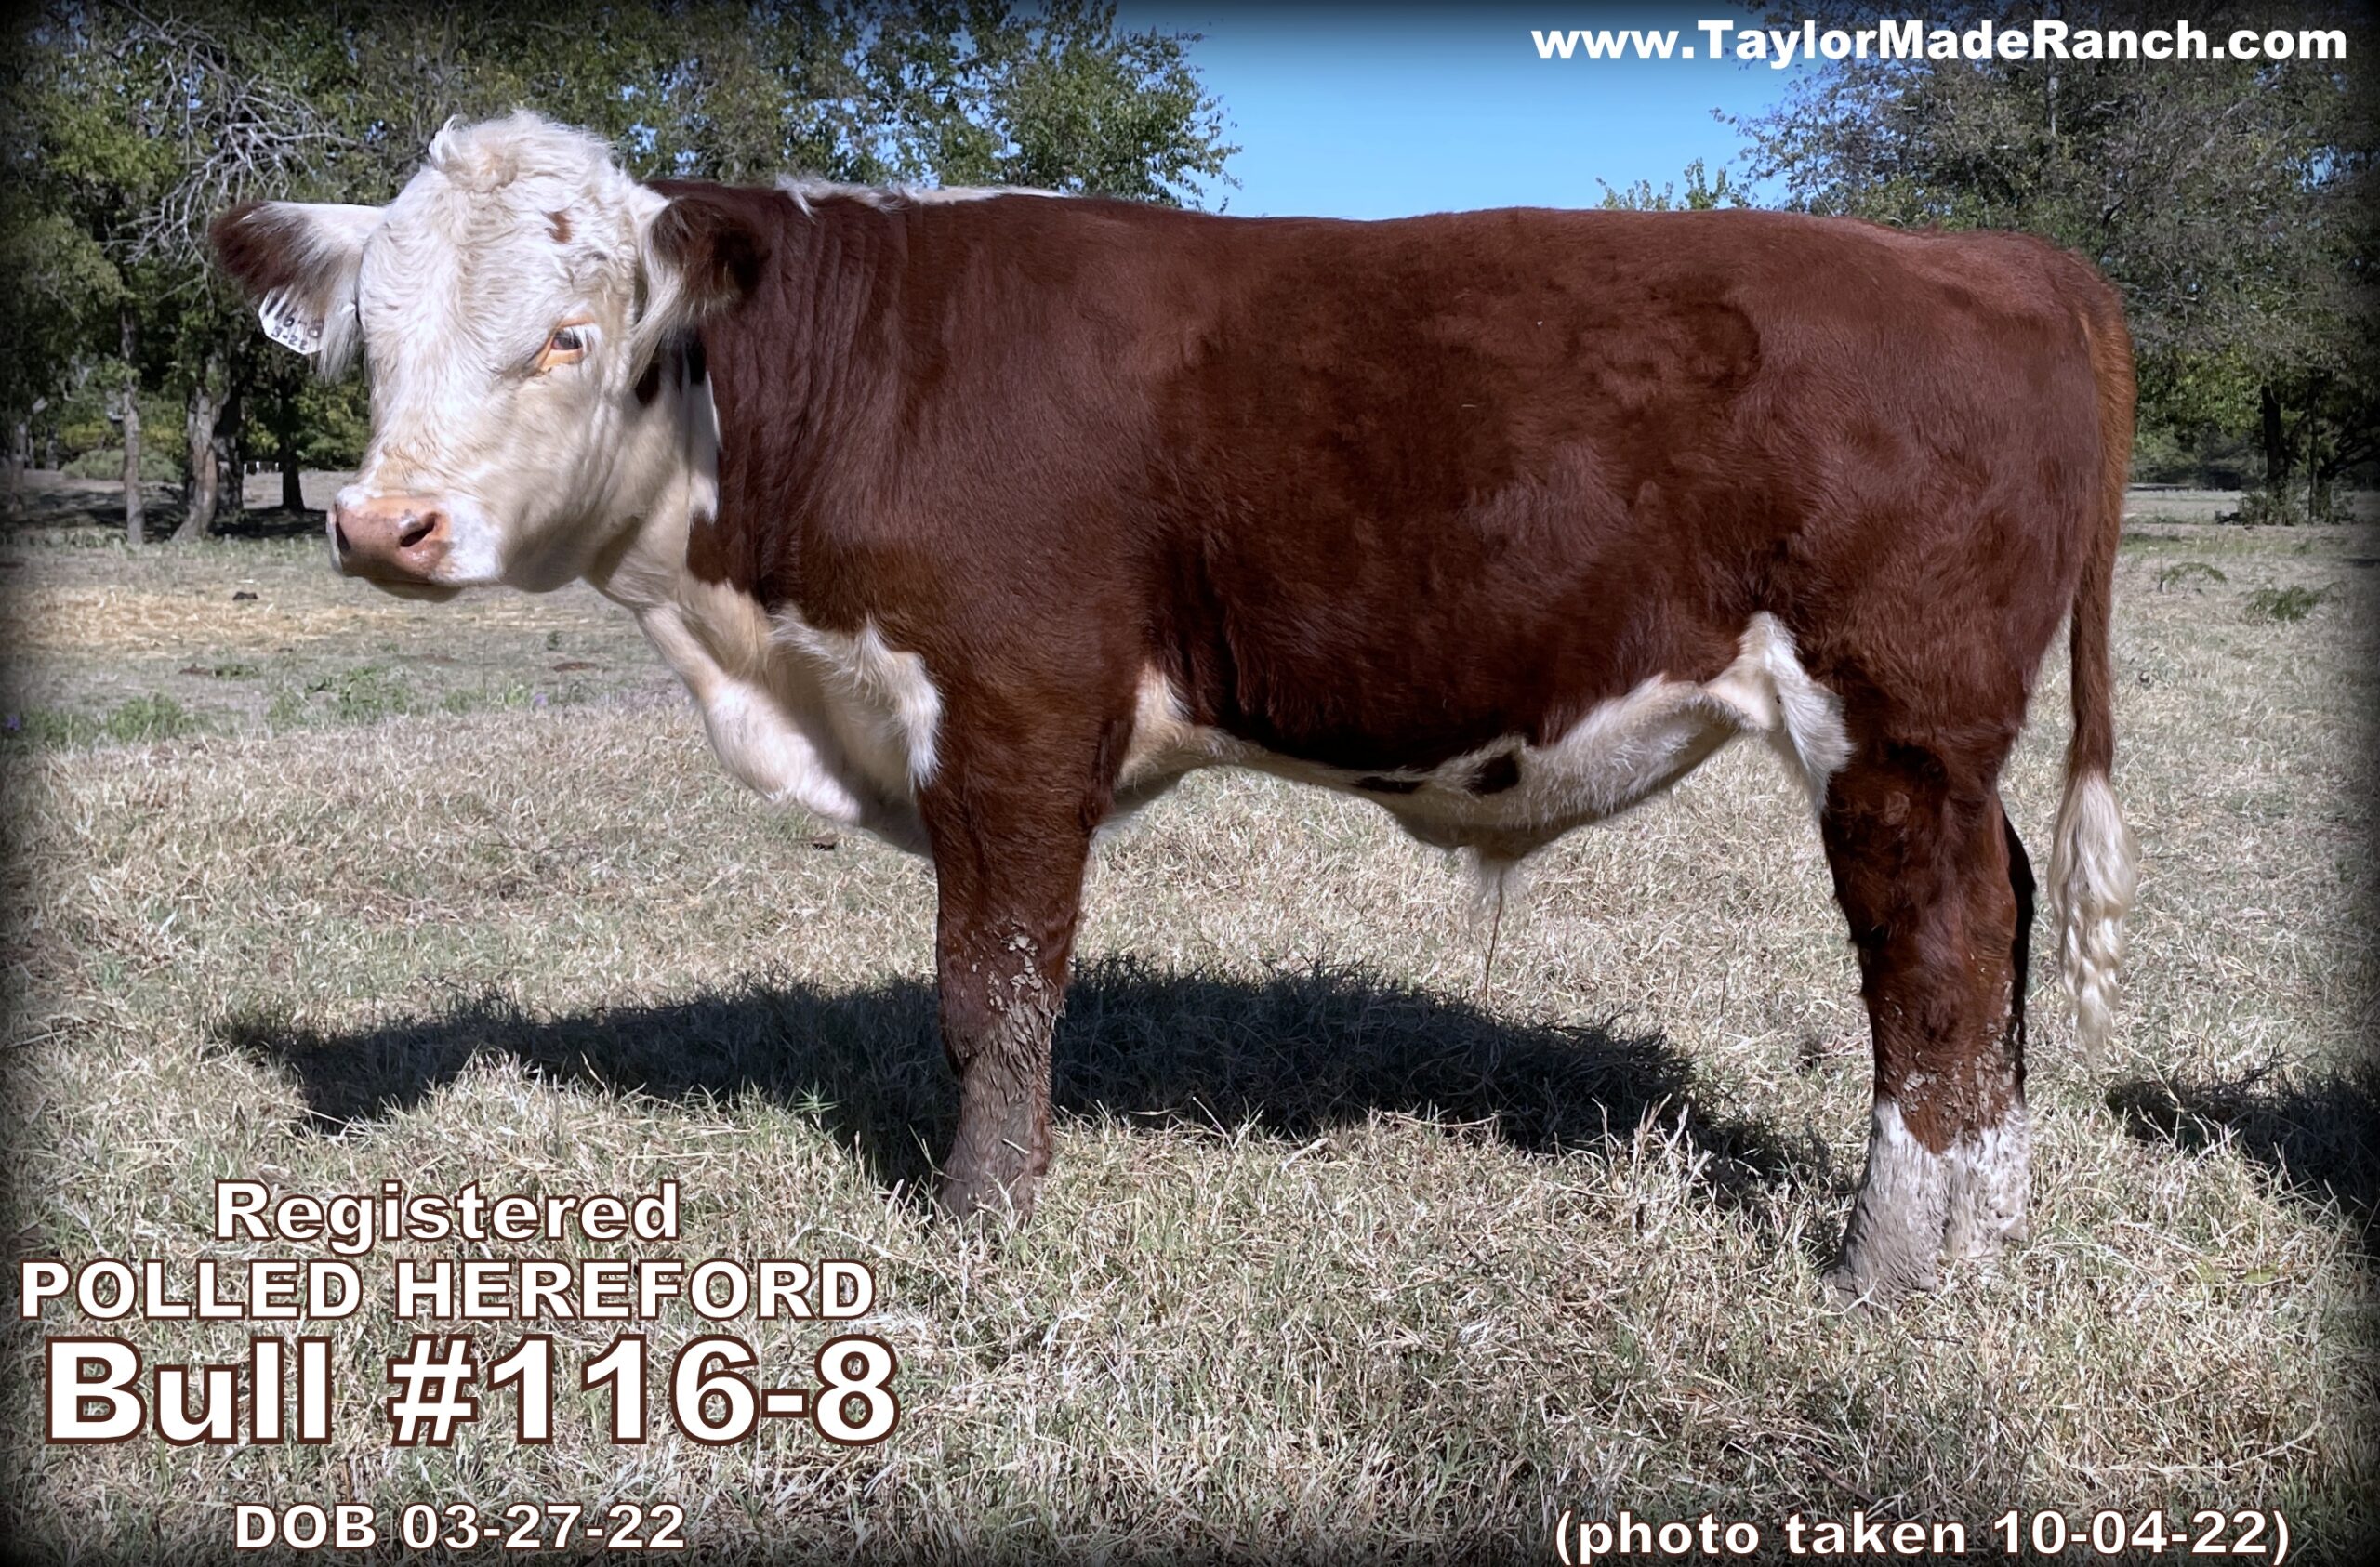 Registered Polled Hereford bull in NE Texas - 116-8-Bull-DOB-03-27-22 - #TaylorMadeRanch - photo-taken-10-04-22